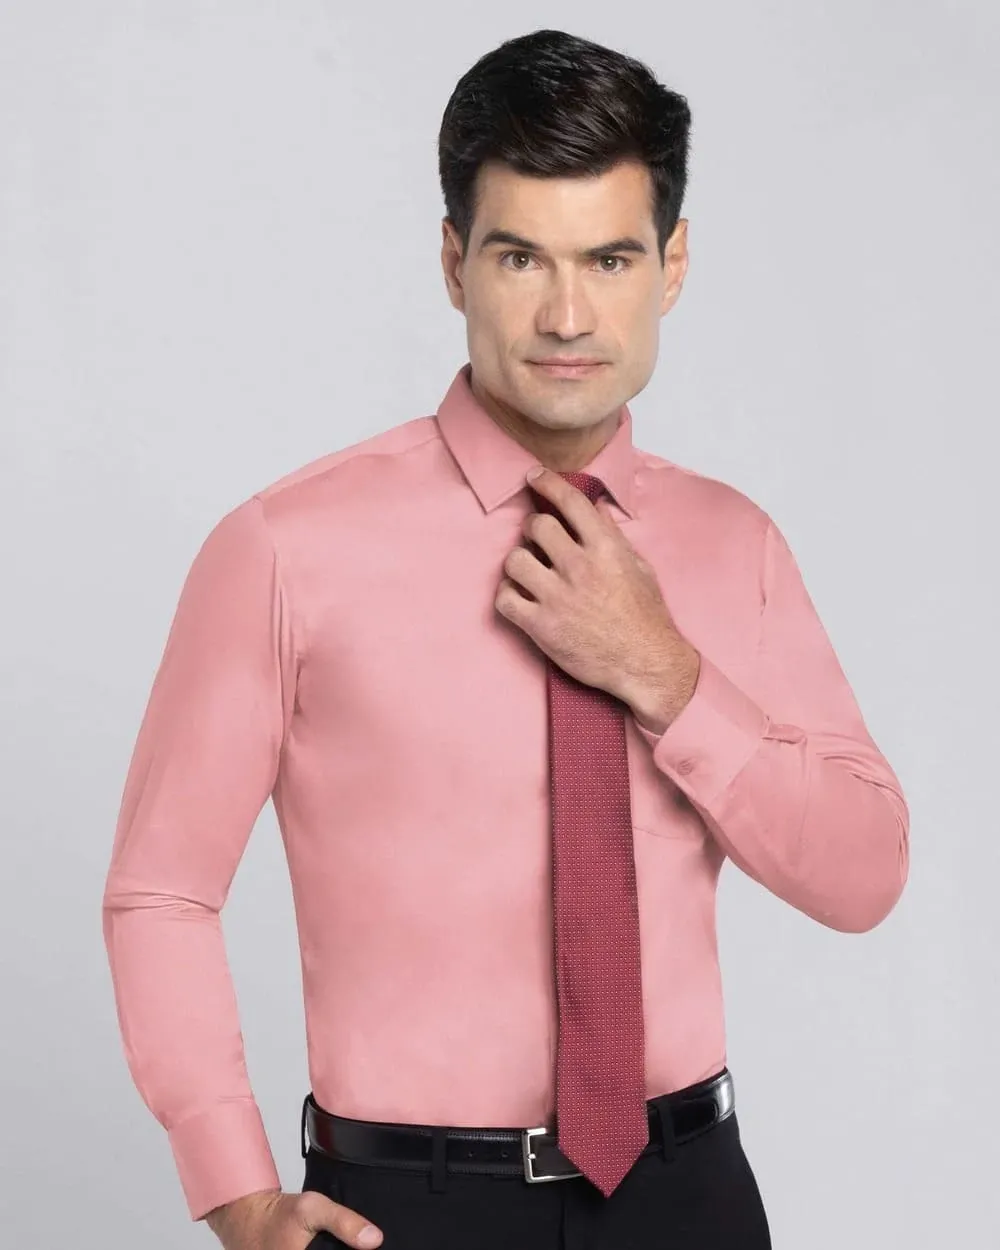 Camisa de vestir piqué rosada manga larga